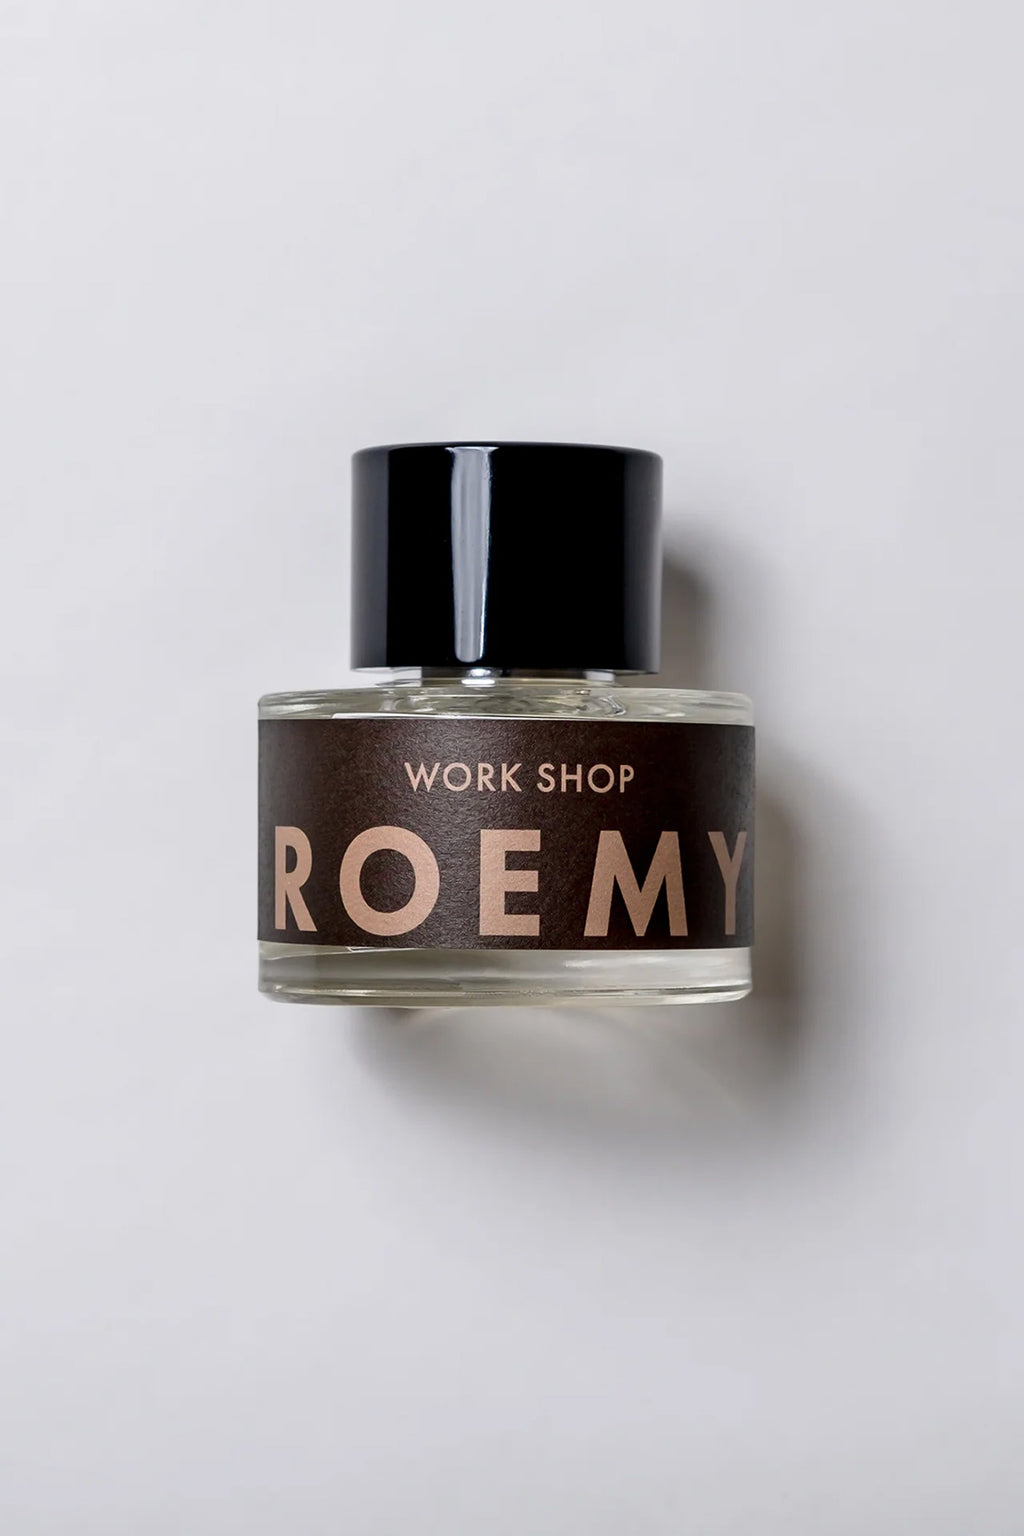 ROEMY - Work Shop - 55ml